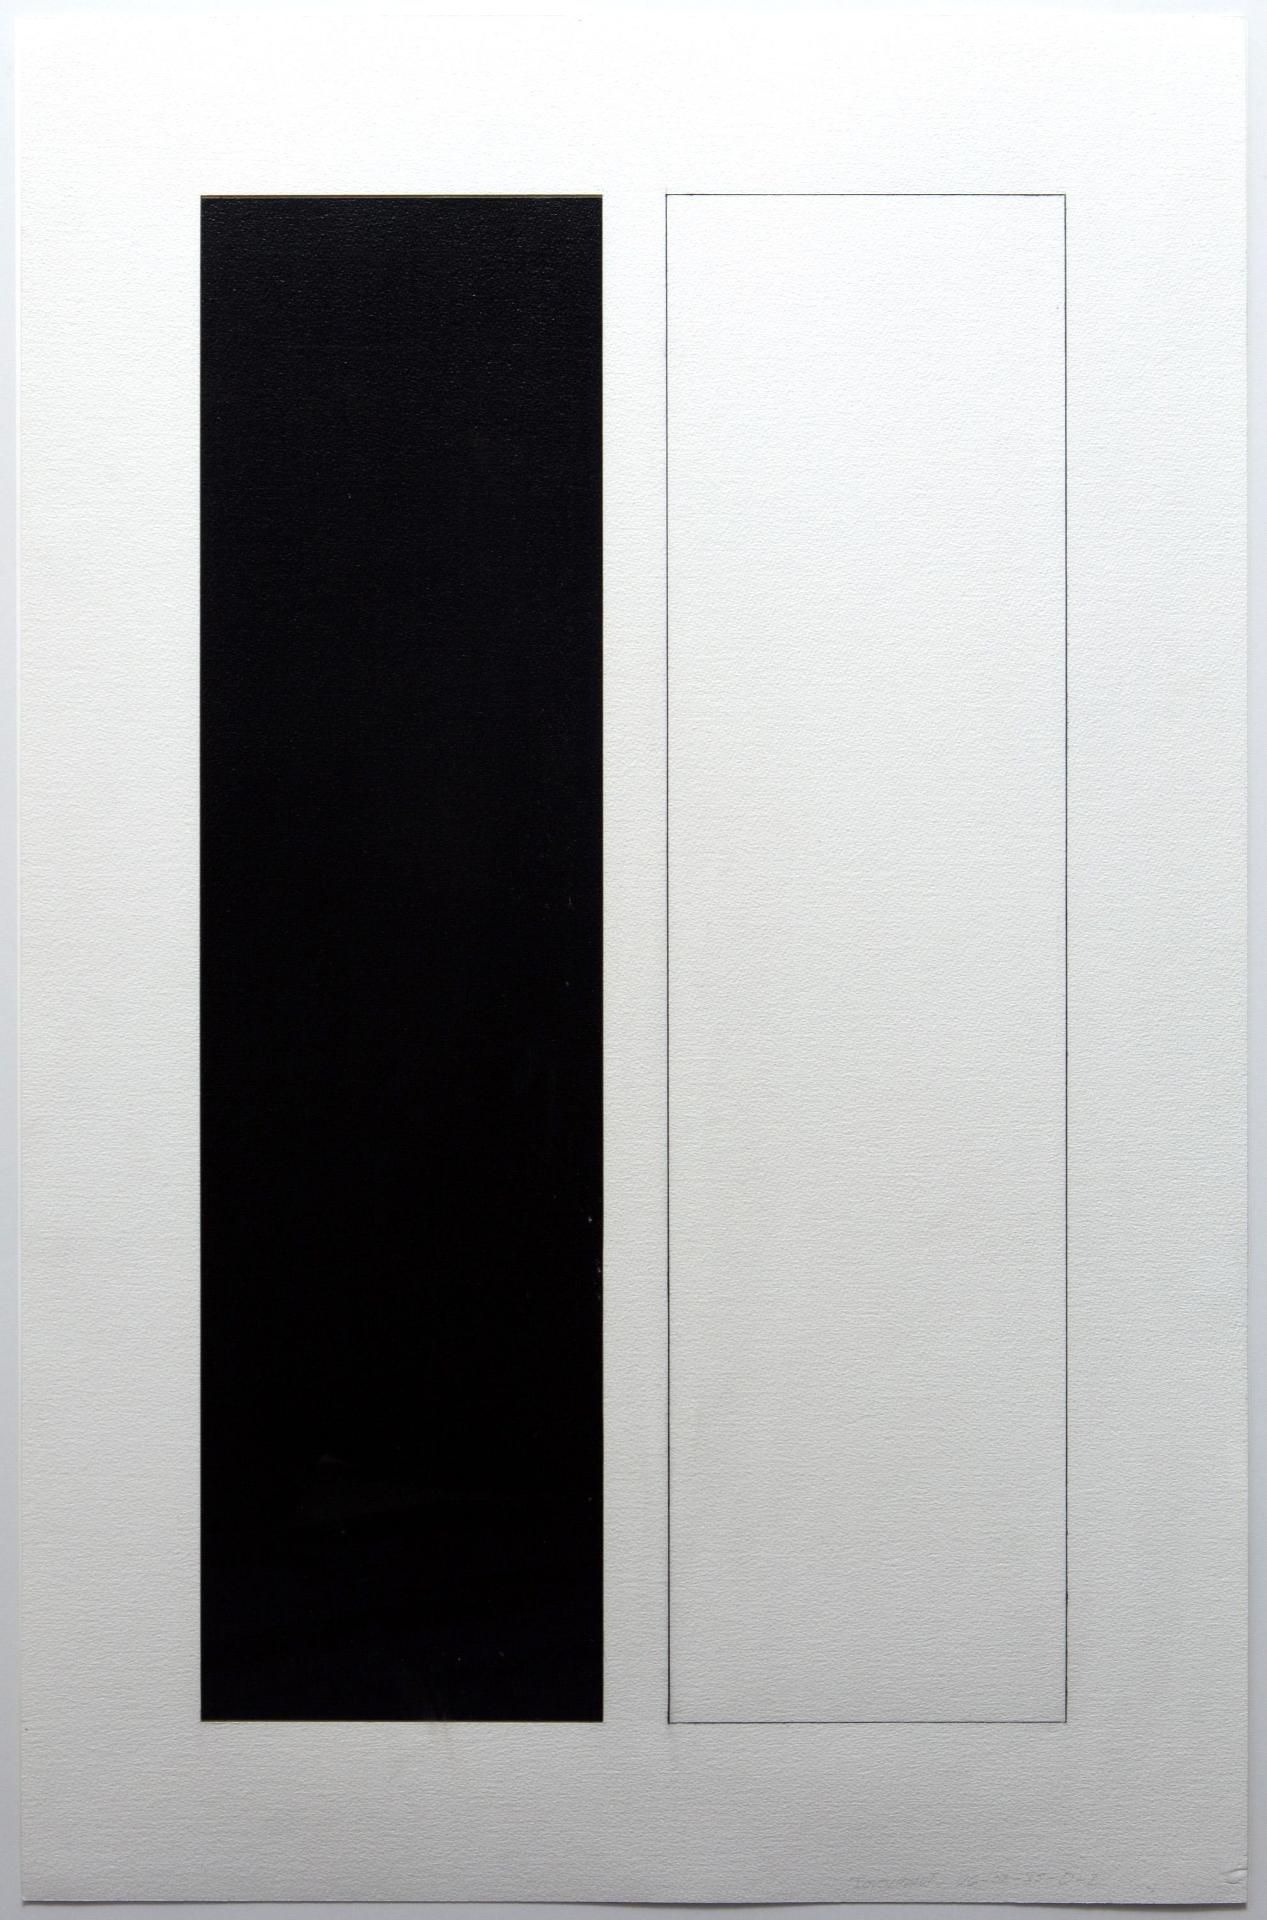 Claude Tousignant (1932) - Suite Wittgenstein Series 26-02-85-D-2, 1985